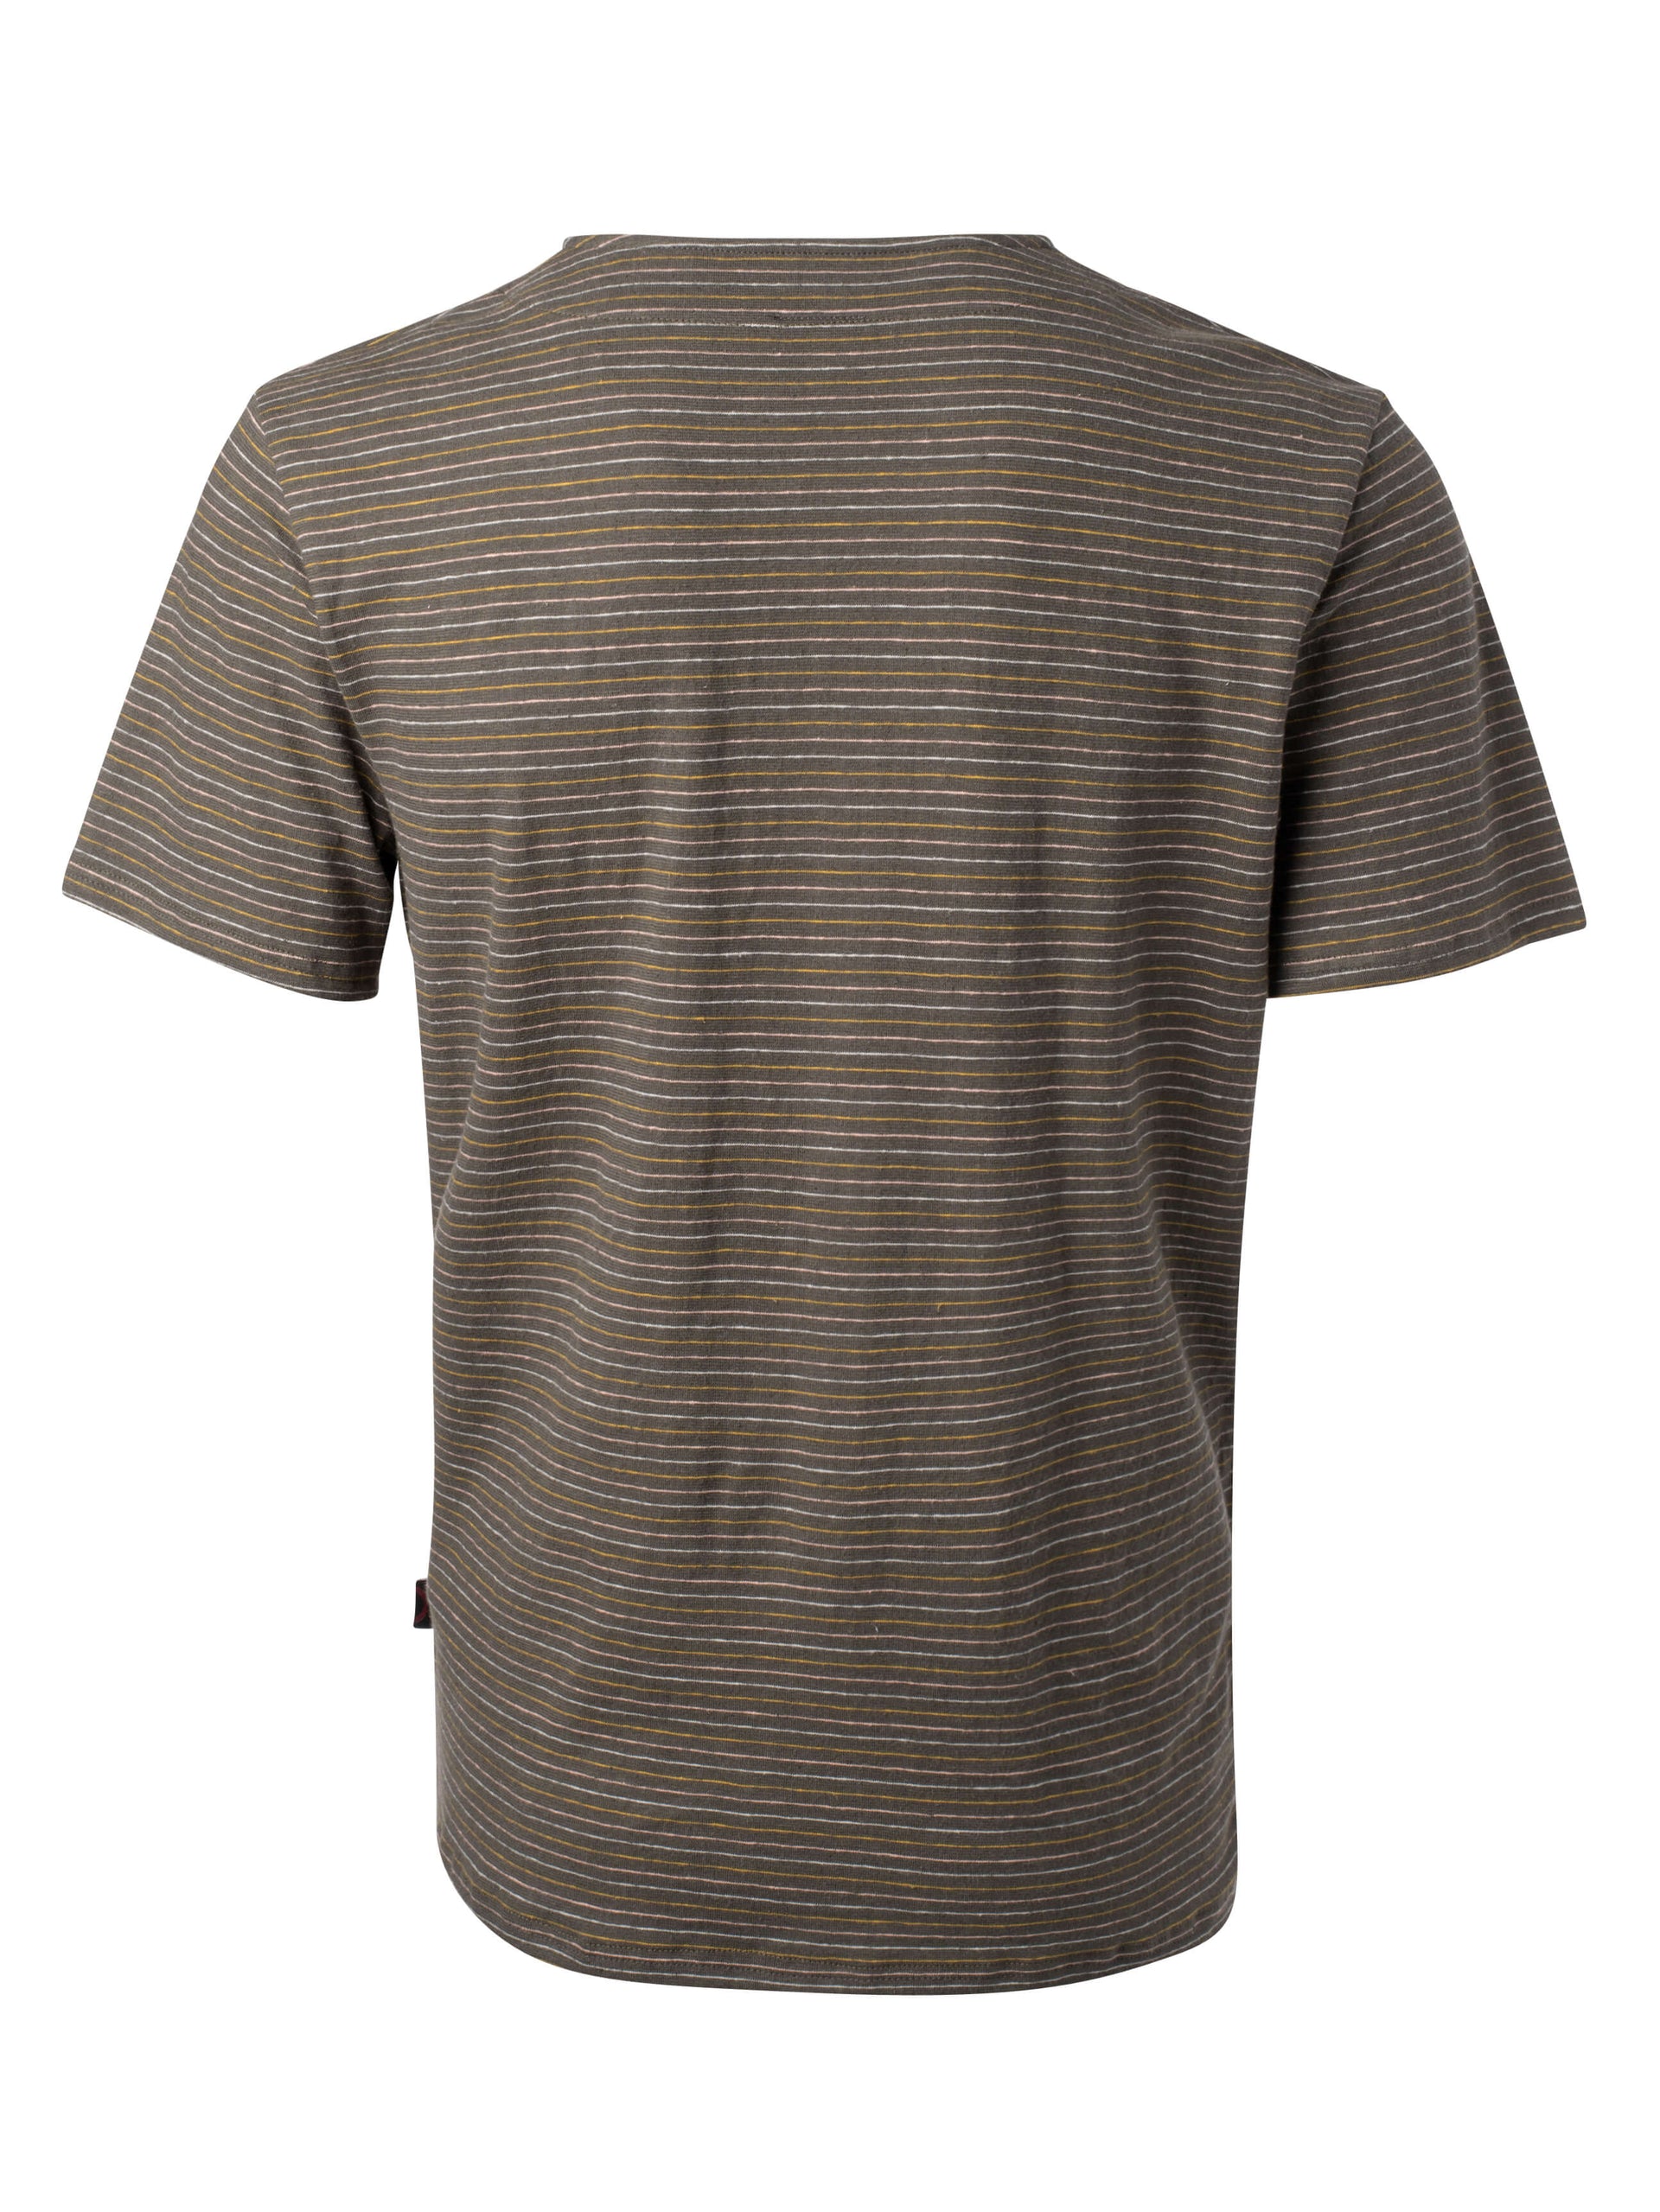 T-shirt-SURF-chanvre coton bio-Kaki-unisexe-ghost dos- F2251